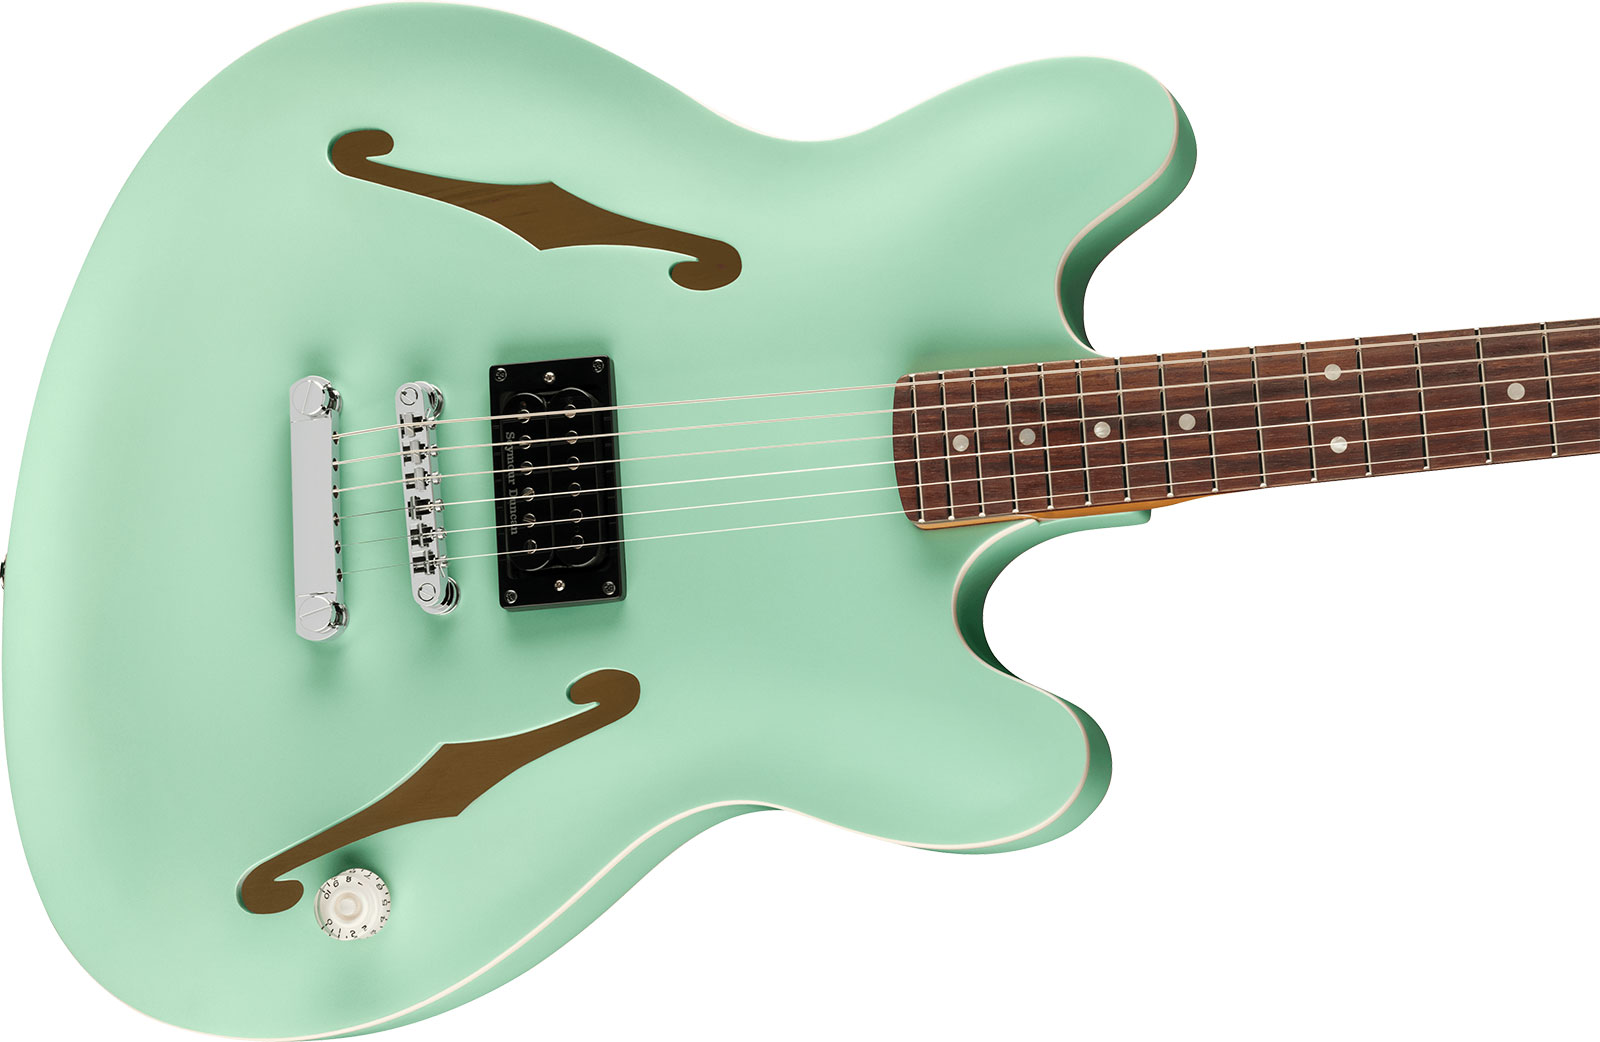 Fender Tom Delonge Starcaster 1h Seymour Duncan Ht Rw - Satin Surf Green - Semi-hollow electric guitar - Variation 2